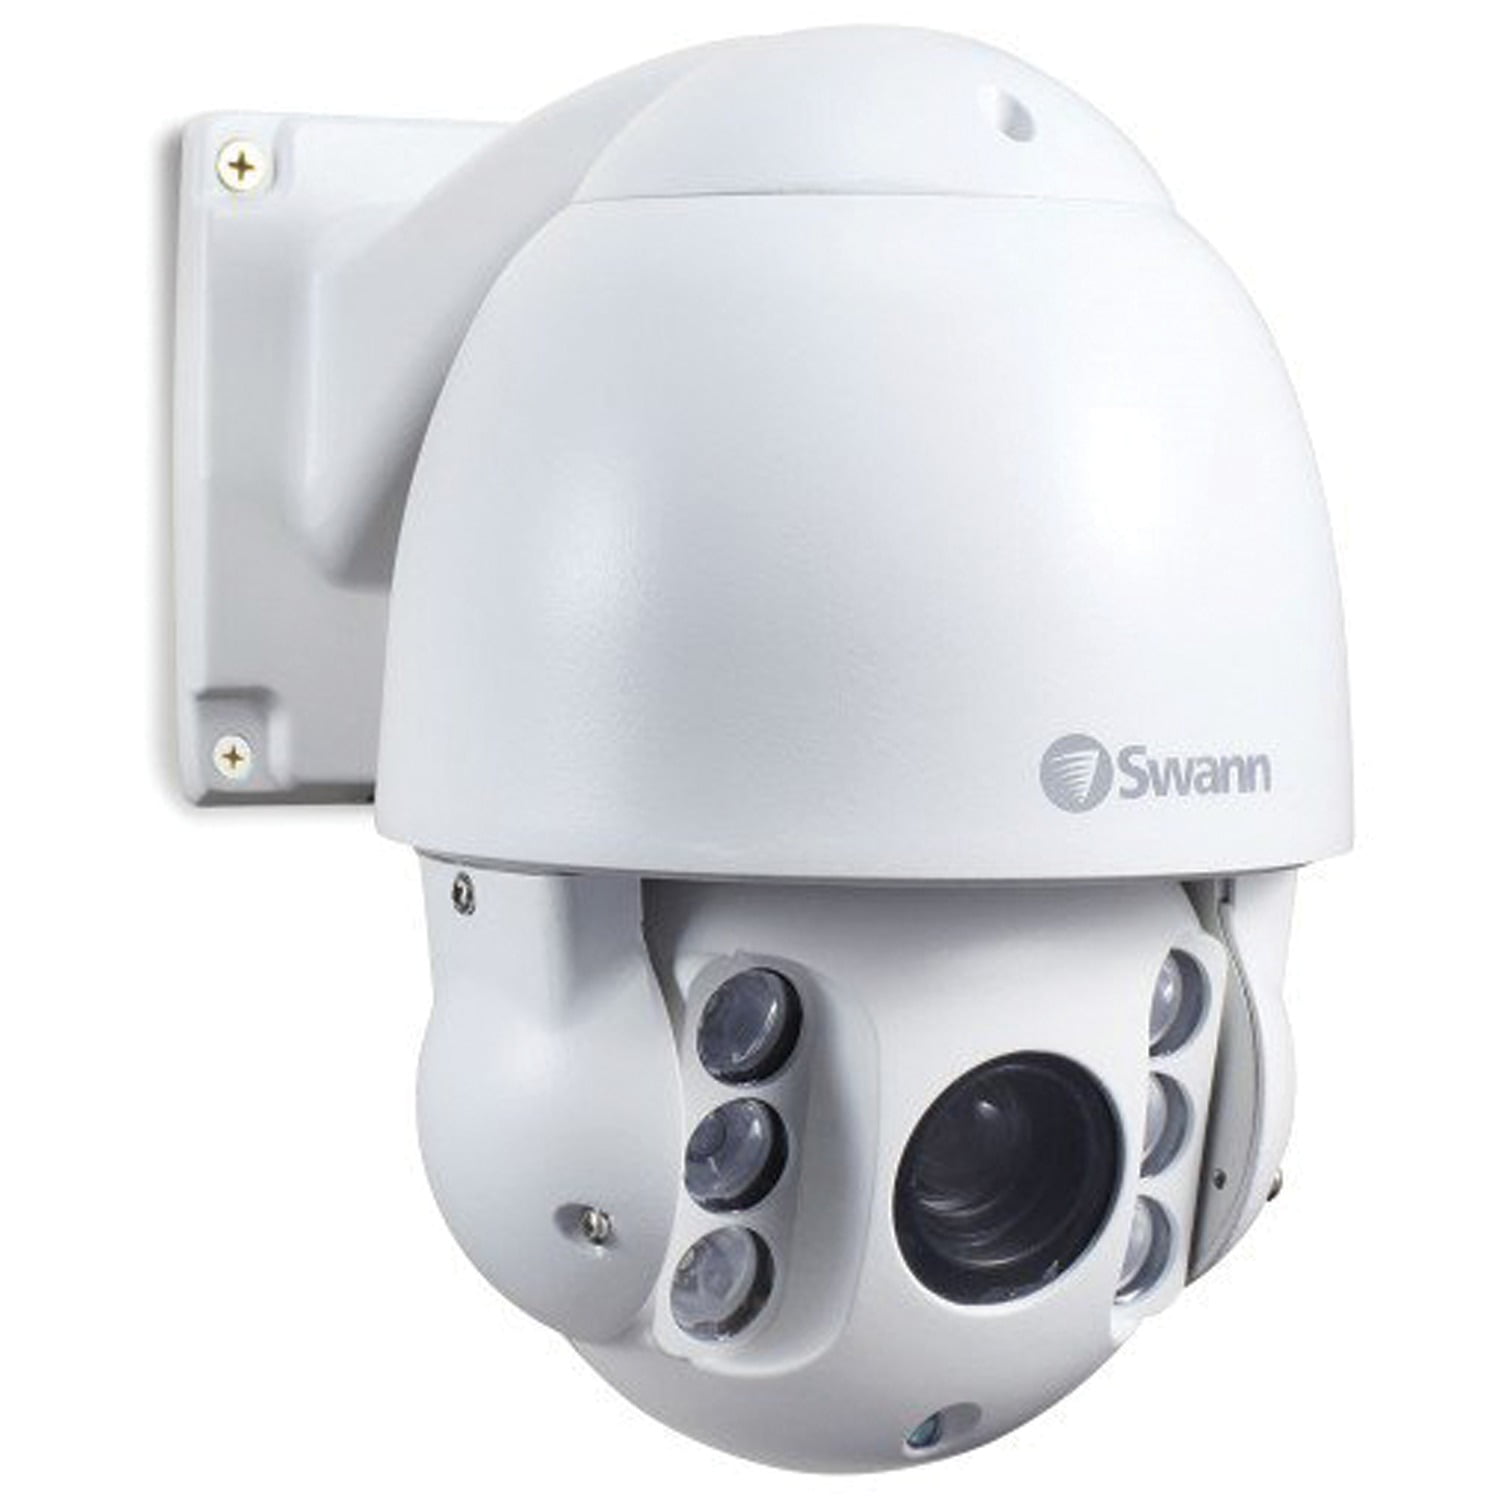 ShotPro-V2™ - Caméra de chasse 4K WIFI